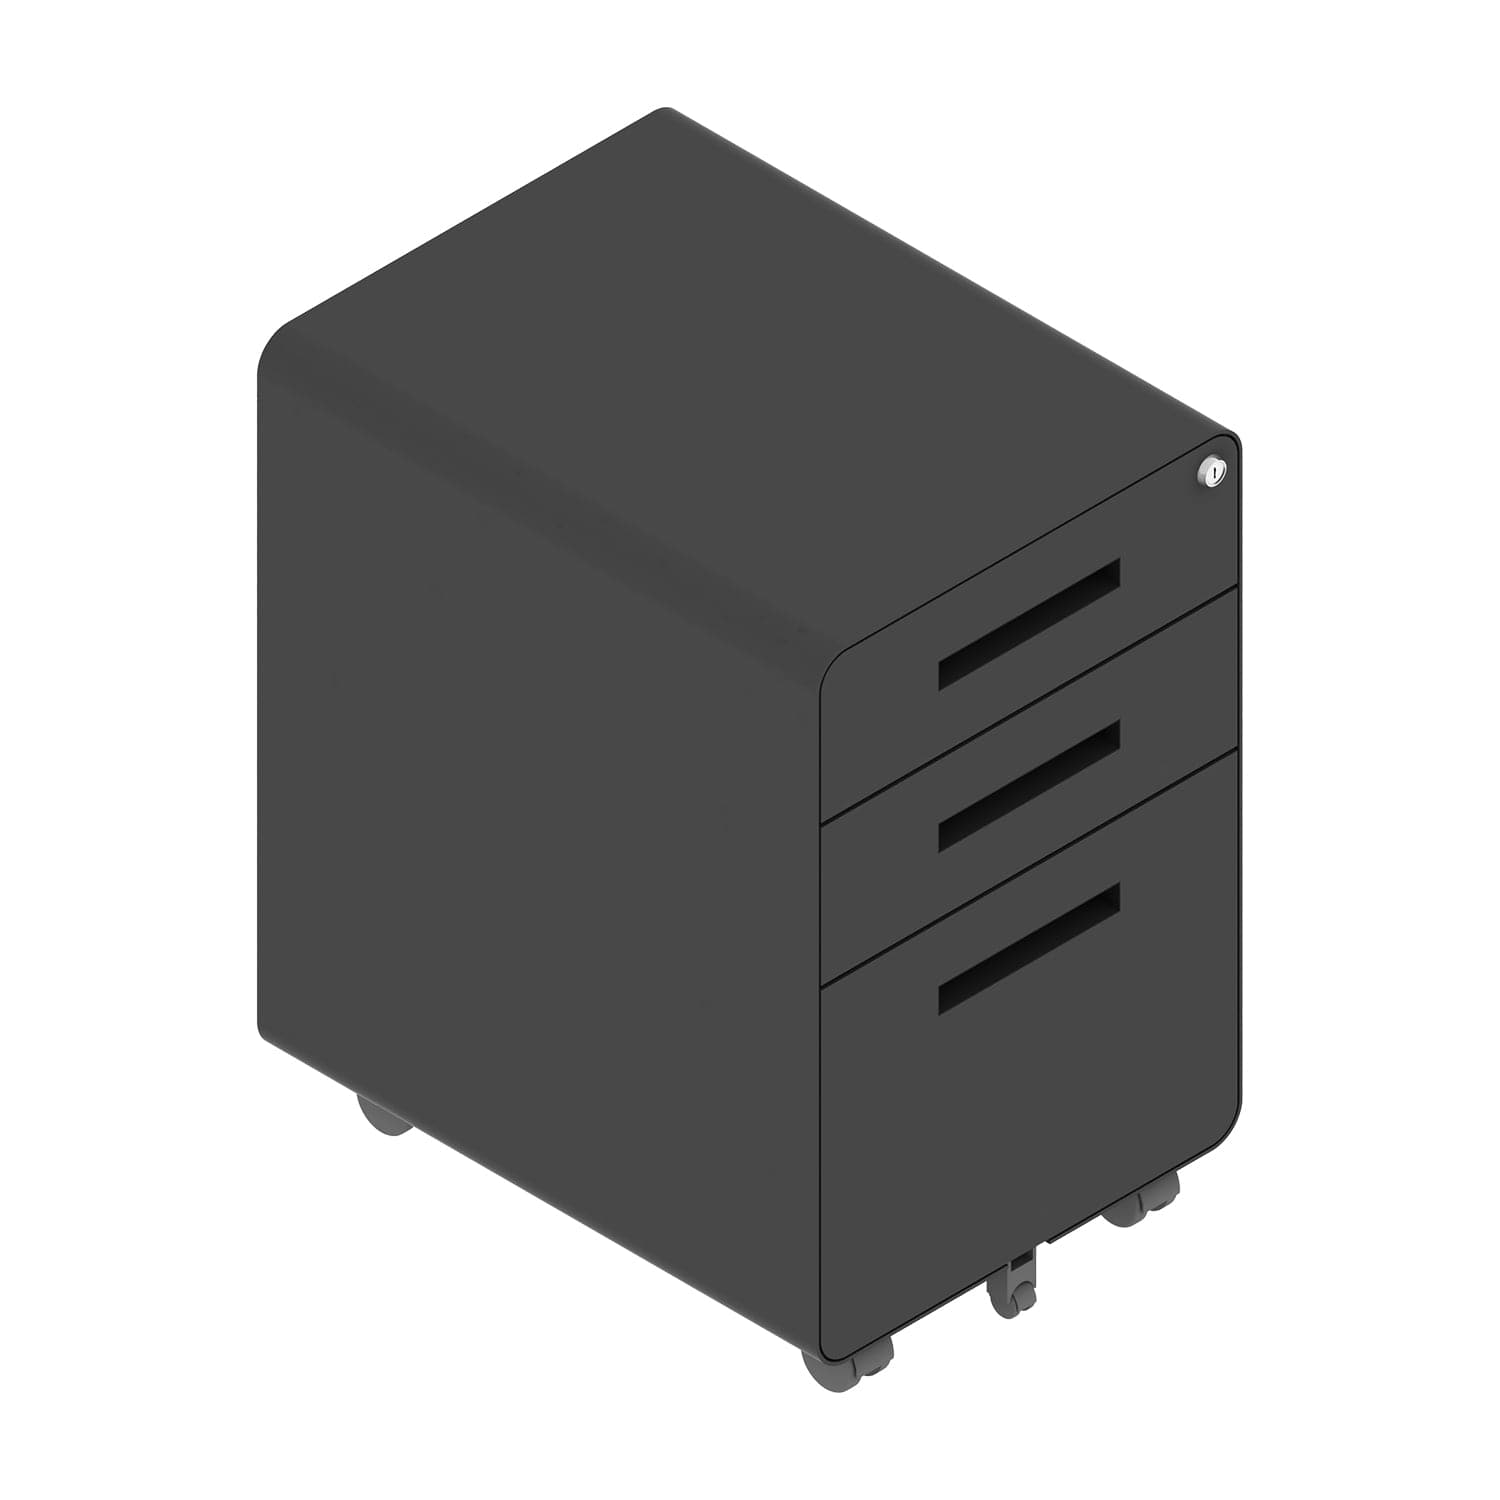 Curvi Mobile Pedestal (3 drawers) - Black